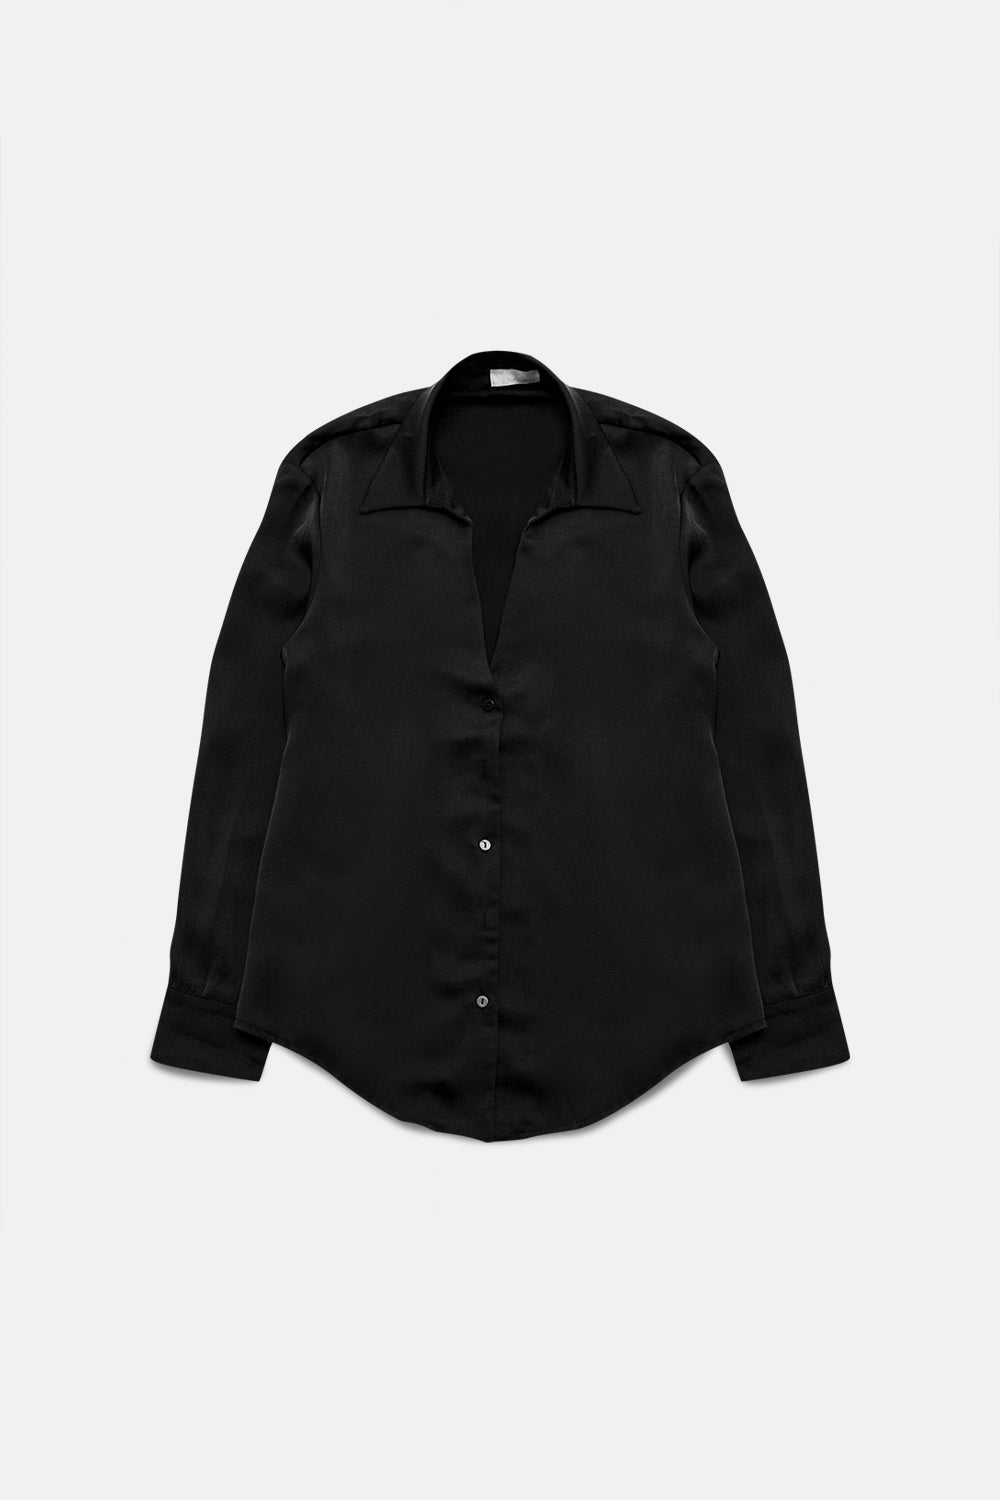 Satin shirt with v neck in black - Szua Store